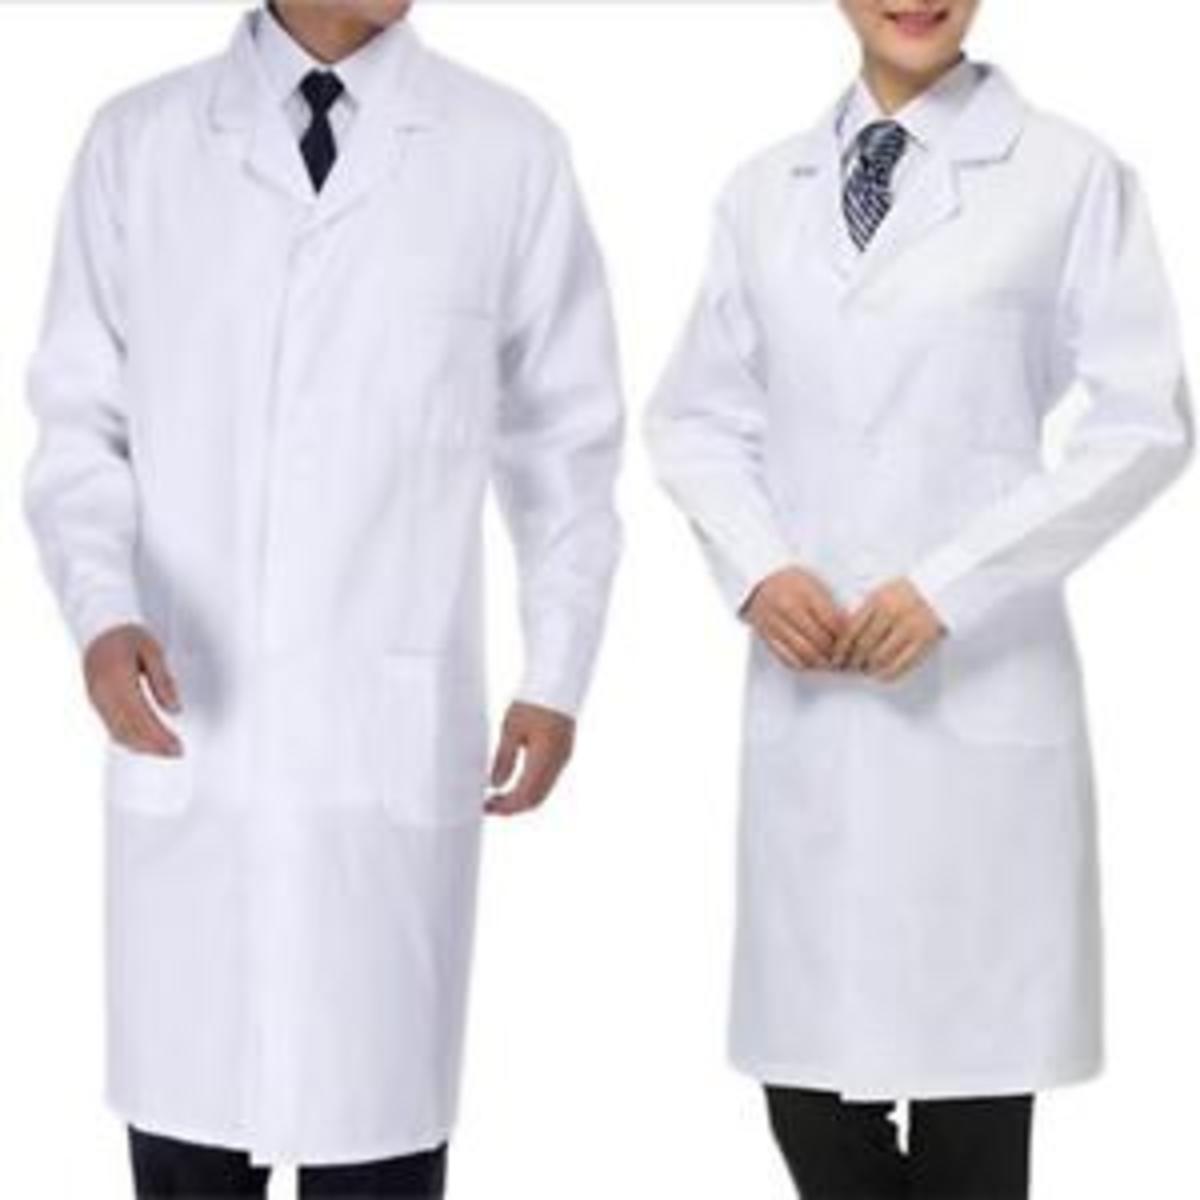 Long white lab coats